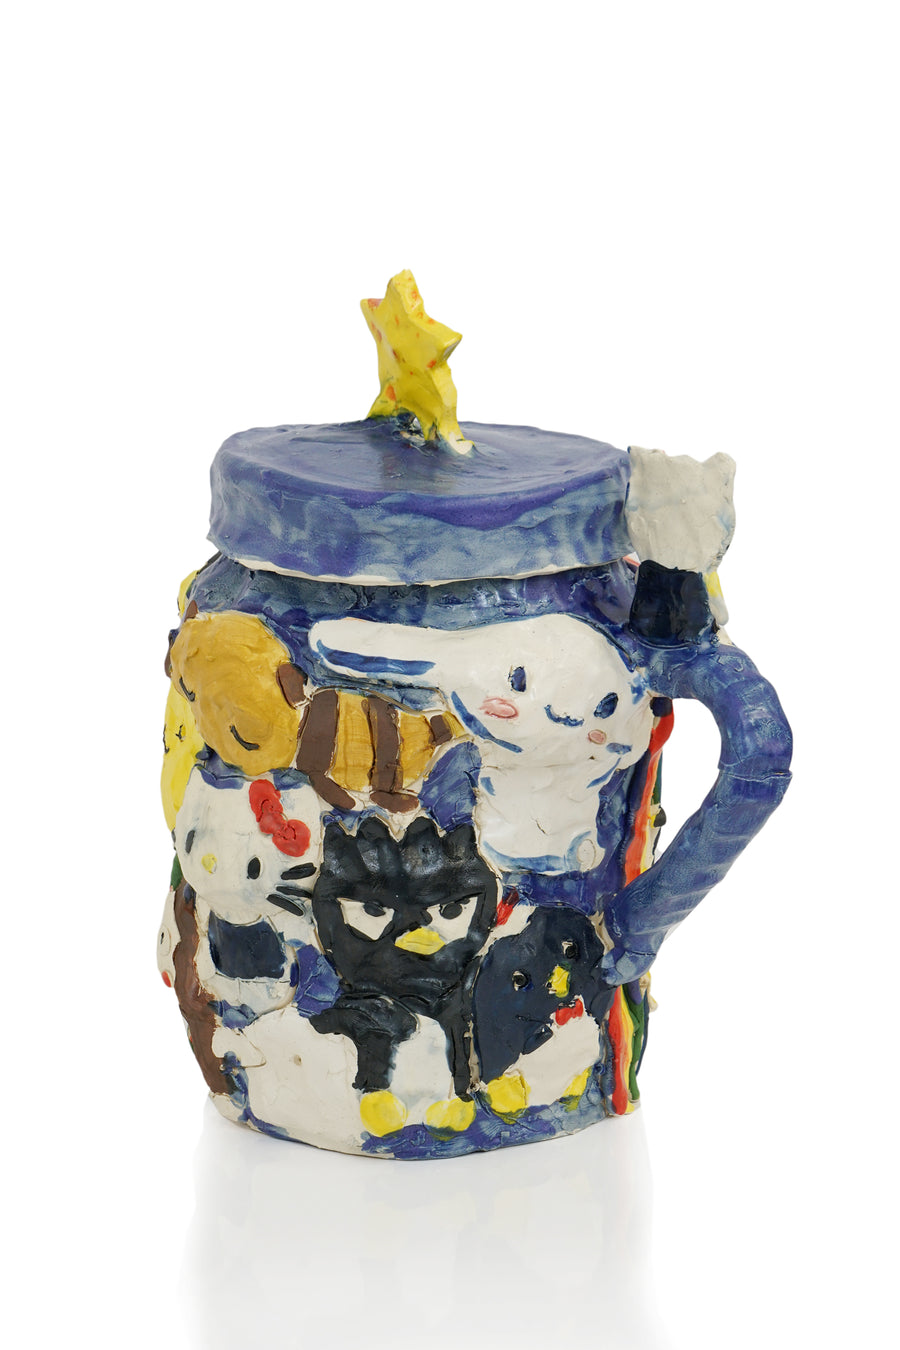 Sanrio Universe Ceramic sculpture- One-of-a-kind